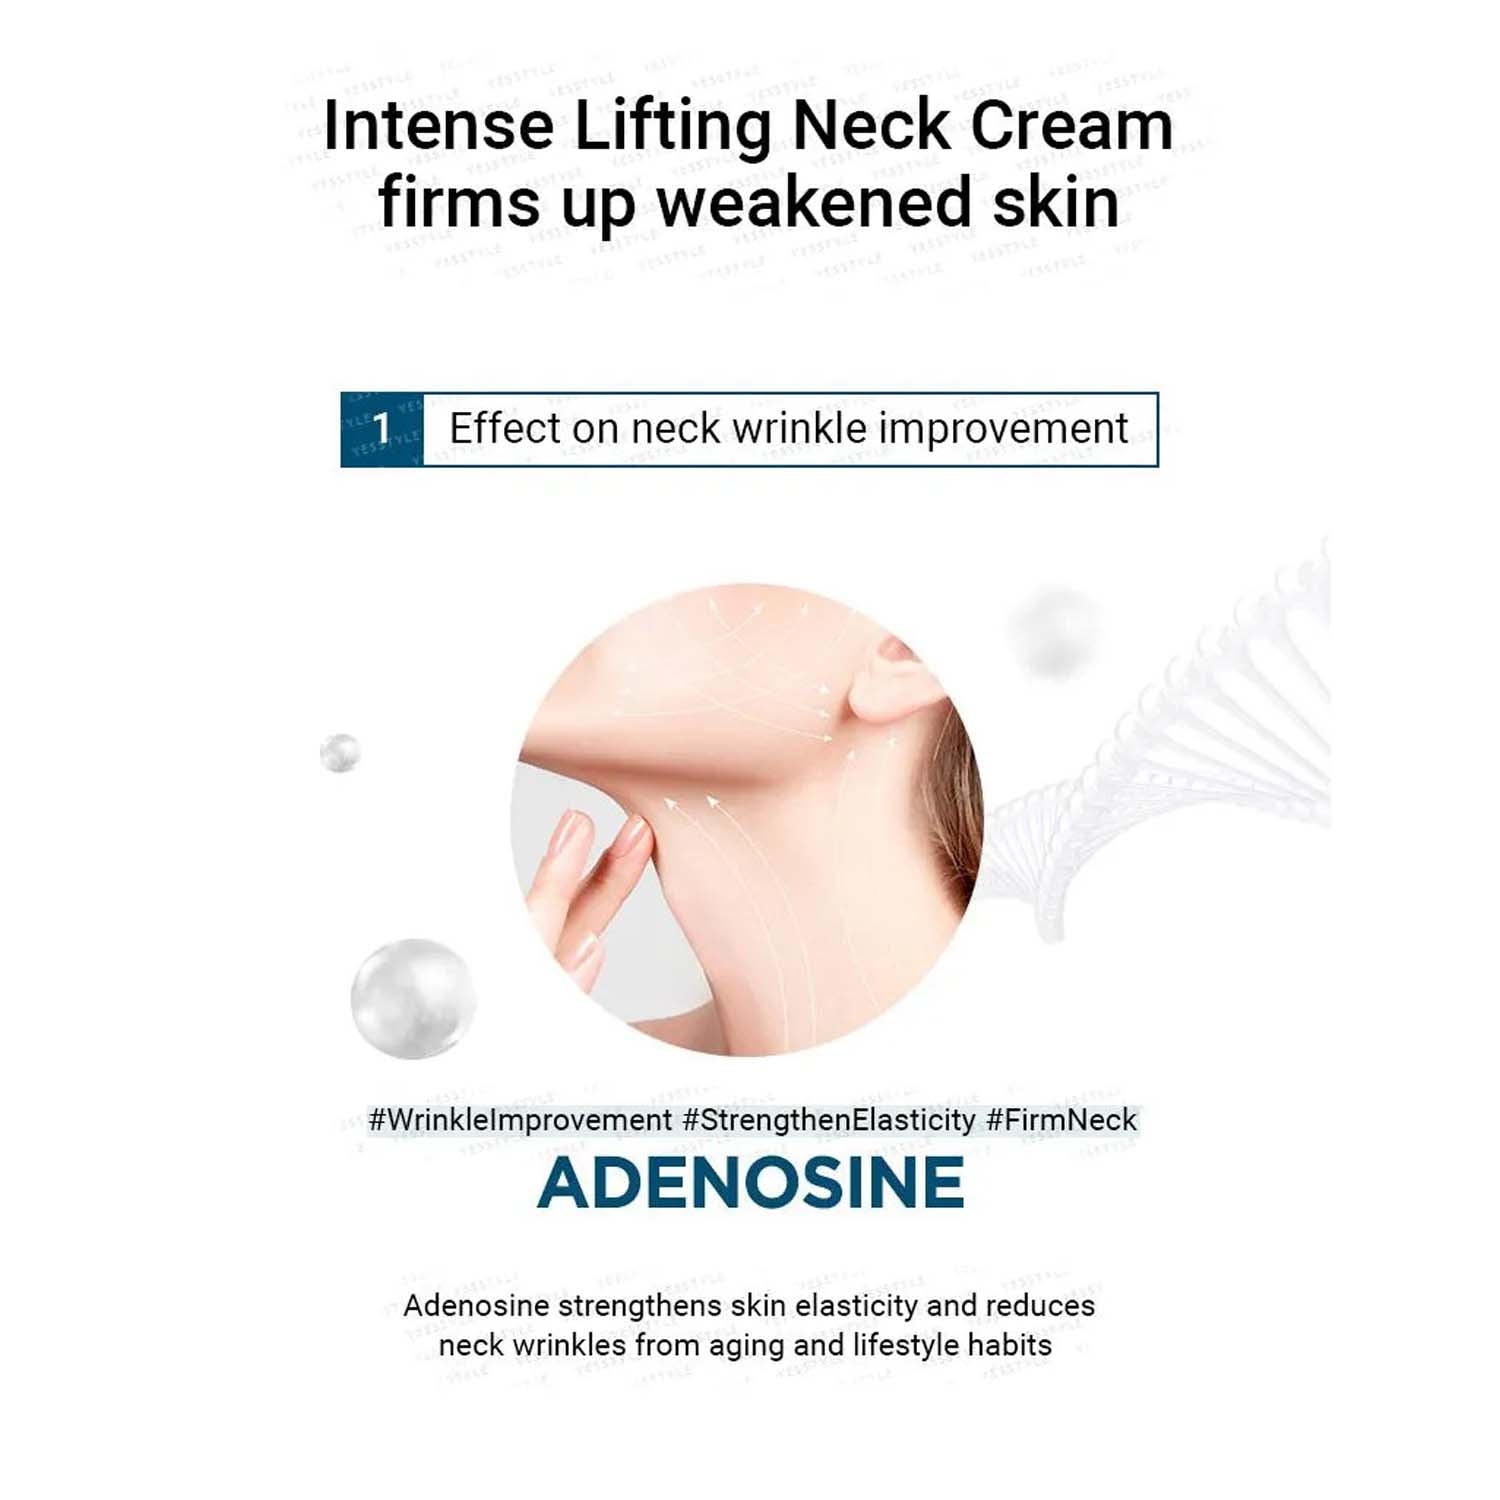 NATUREKIND - Intense Lifting Neck Cream